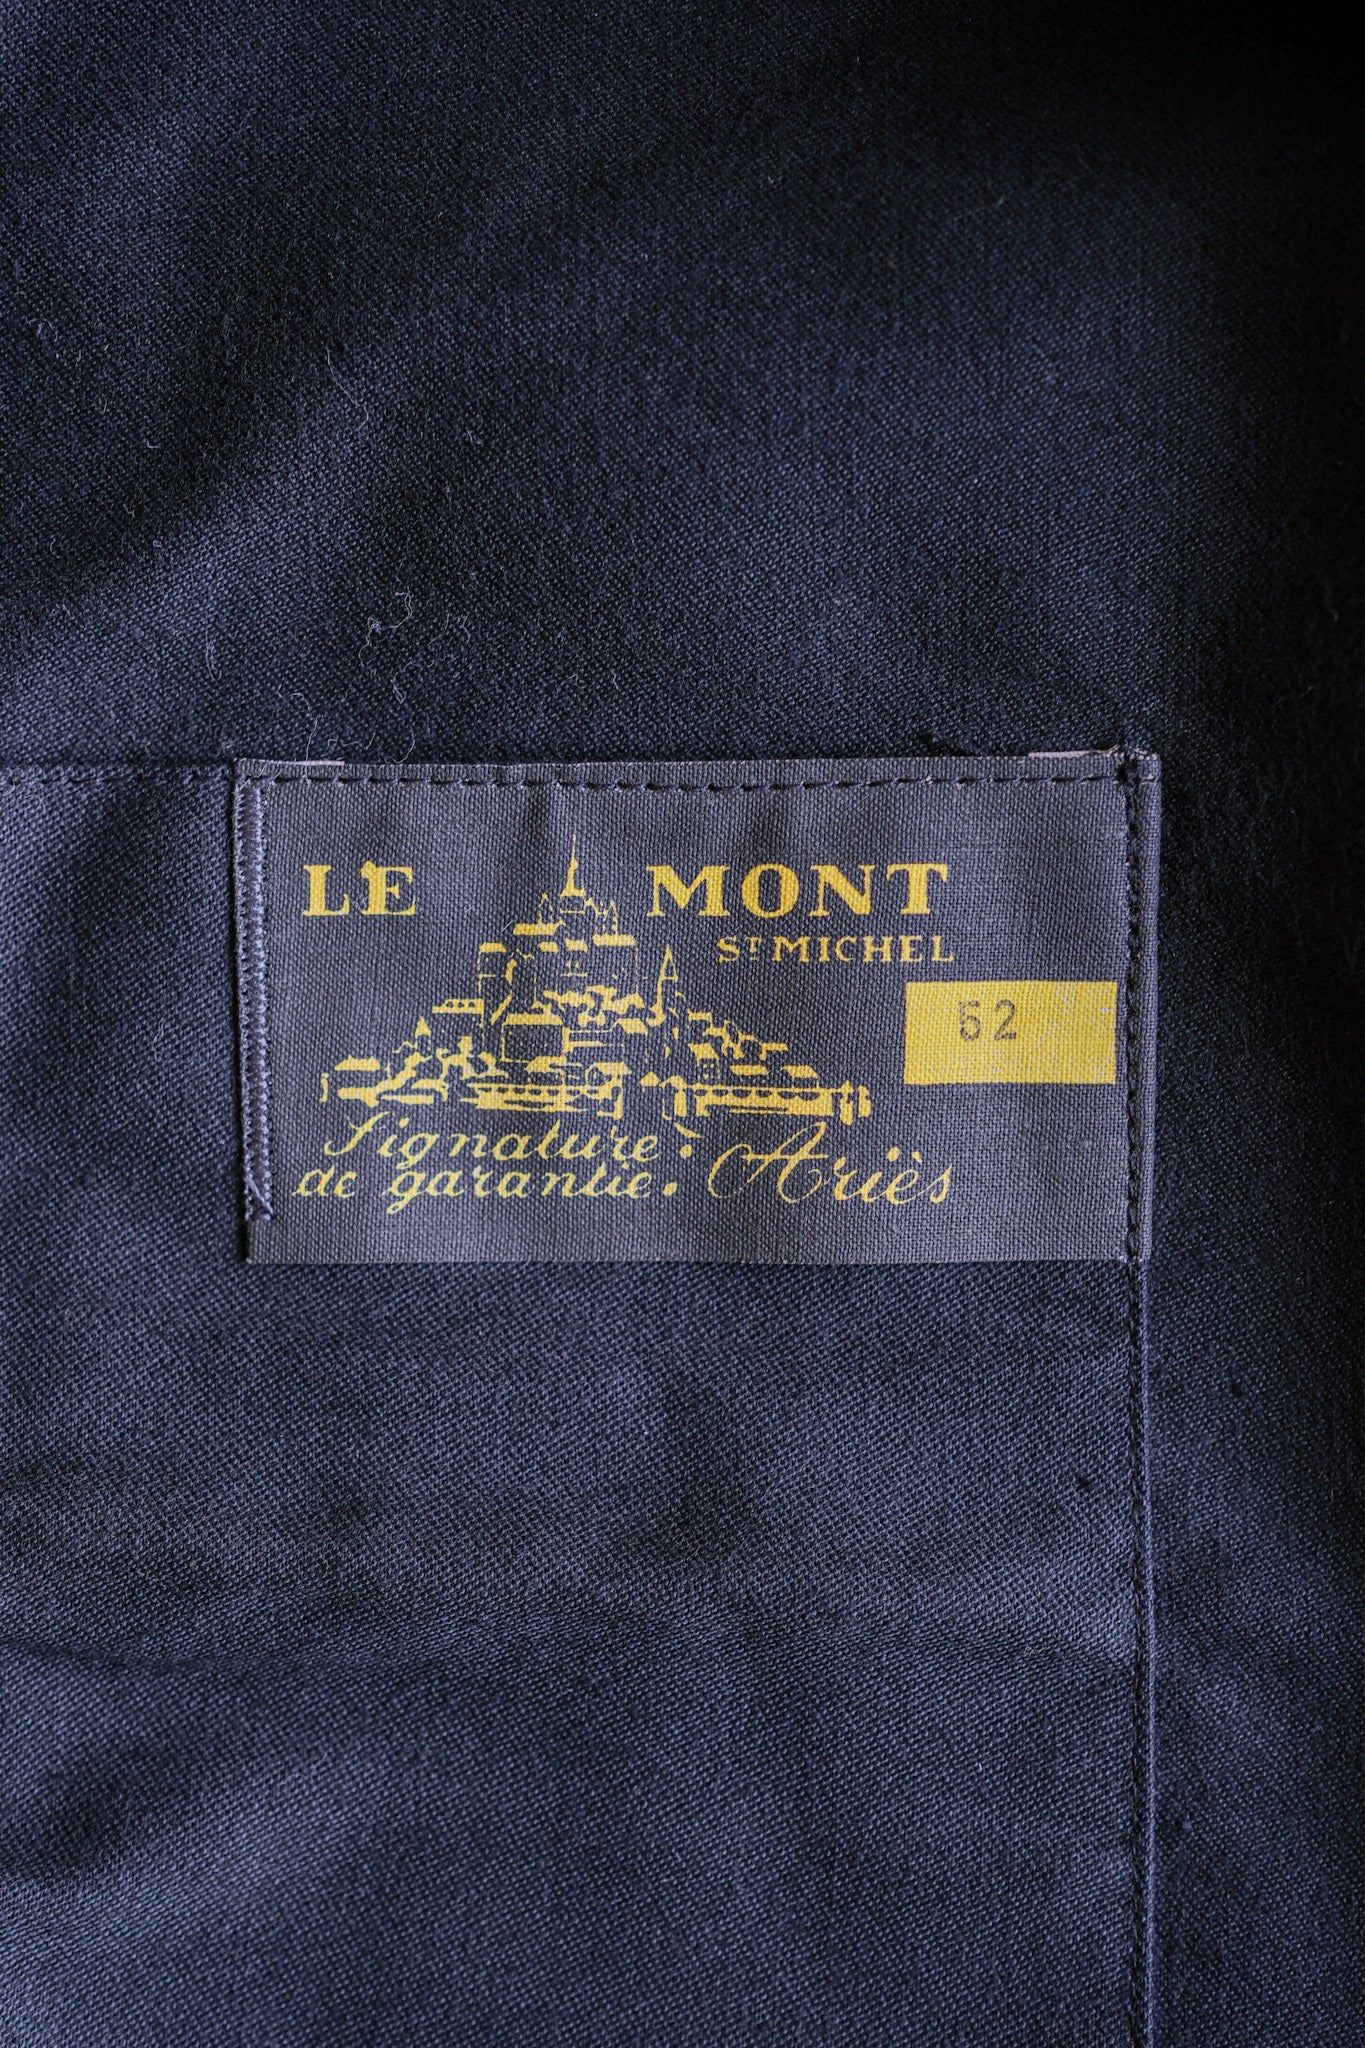 [~ 50's] แจ็คเก็ตตัวตุ่นสีดำวินเทจฝรั่งเศสขนาด 52 "Le Mont Stock Michel" "Dead Stock"